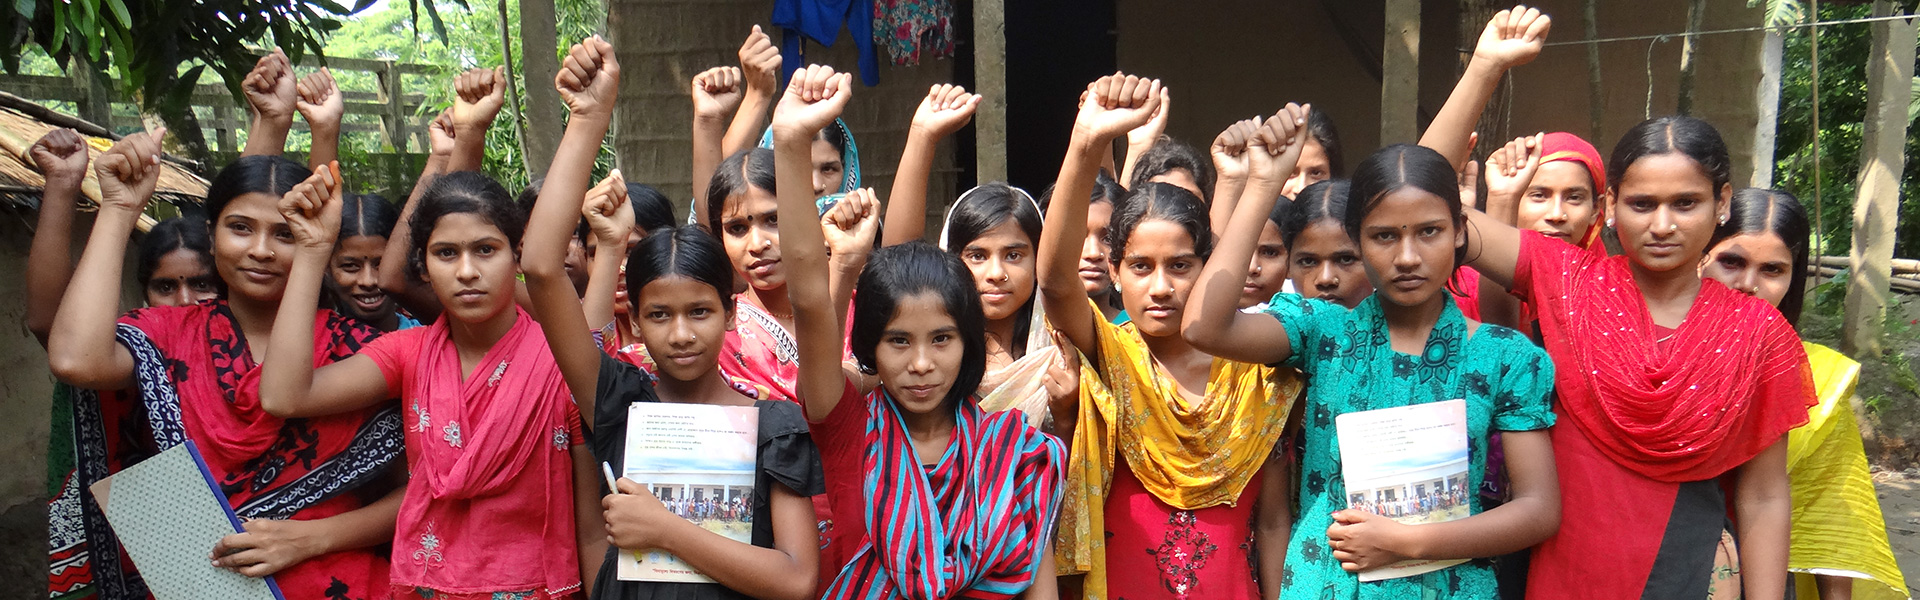 bangladesh-shonglap-girls-fighting-for-their-rights